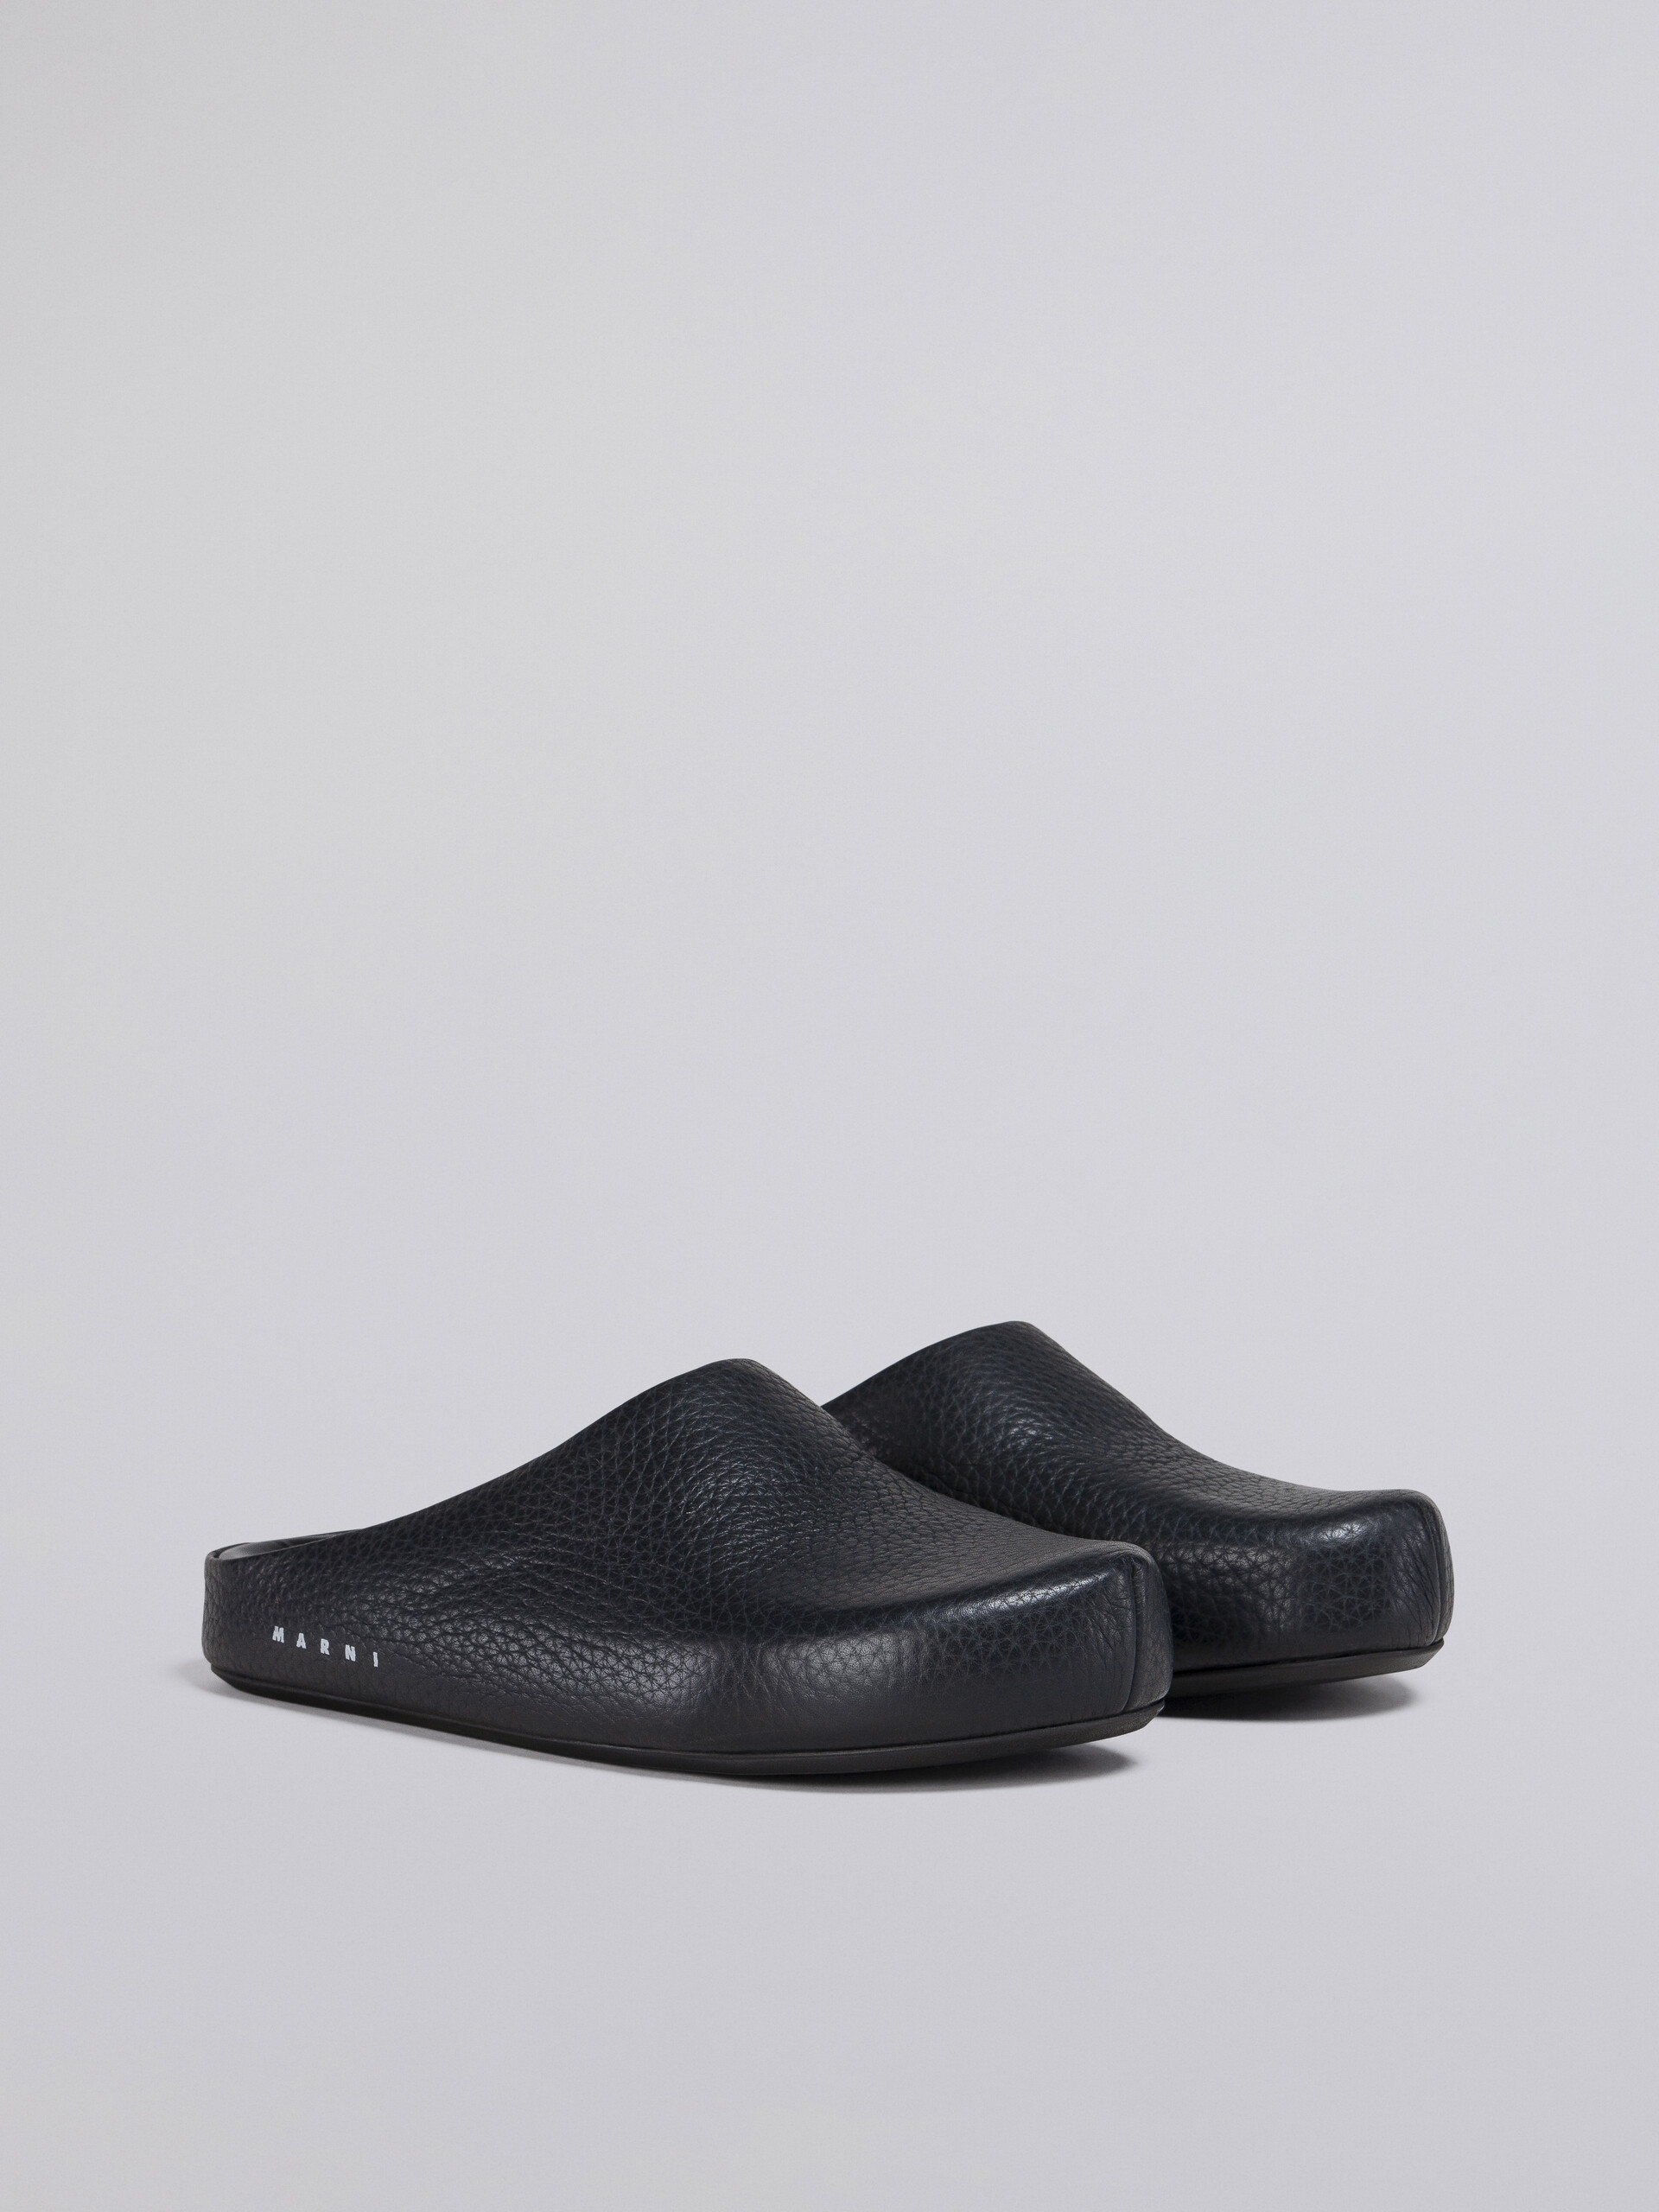 Unisex-Sandale aus schwarzem genarbtem Kalbsleder - Holzschuhe - Image 2